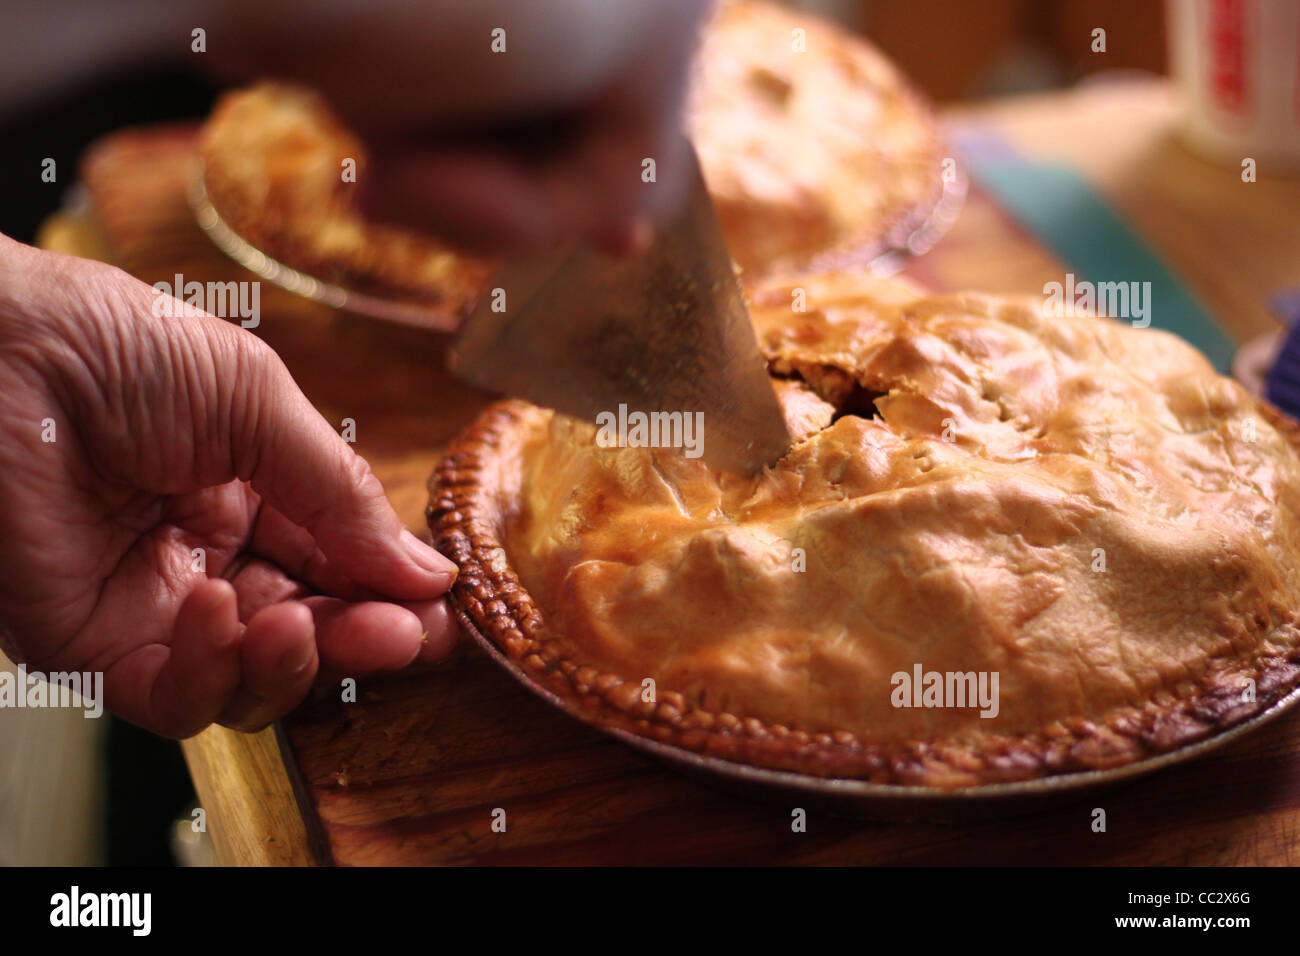 Homemade apple pie getting sliced Stock Photo